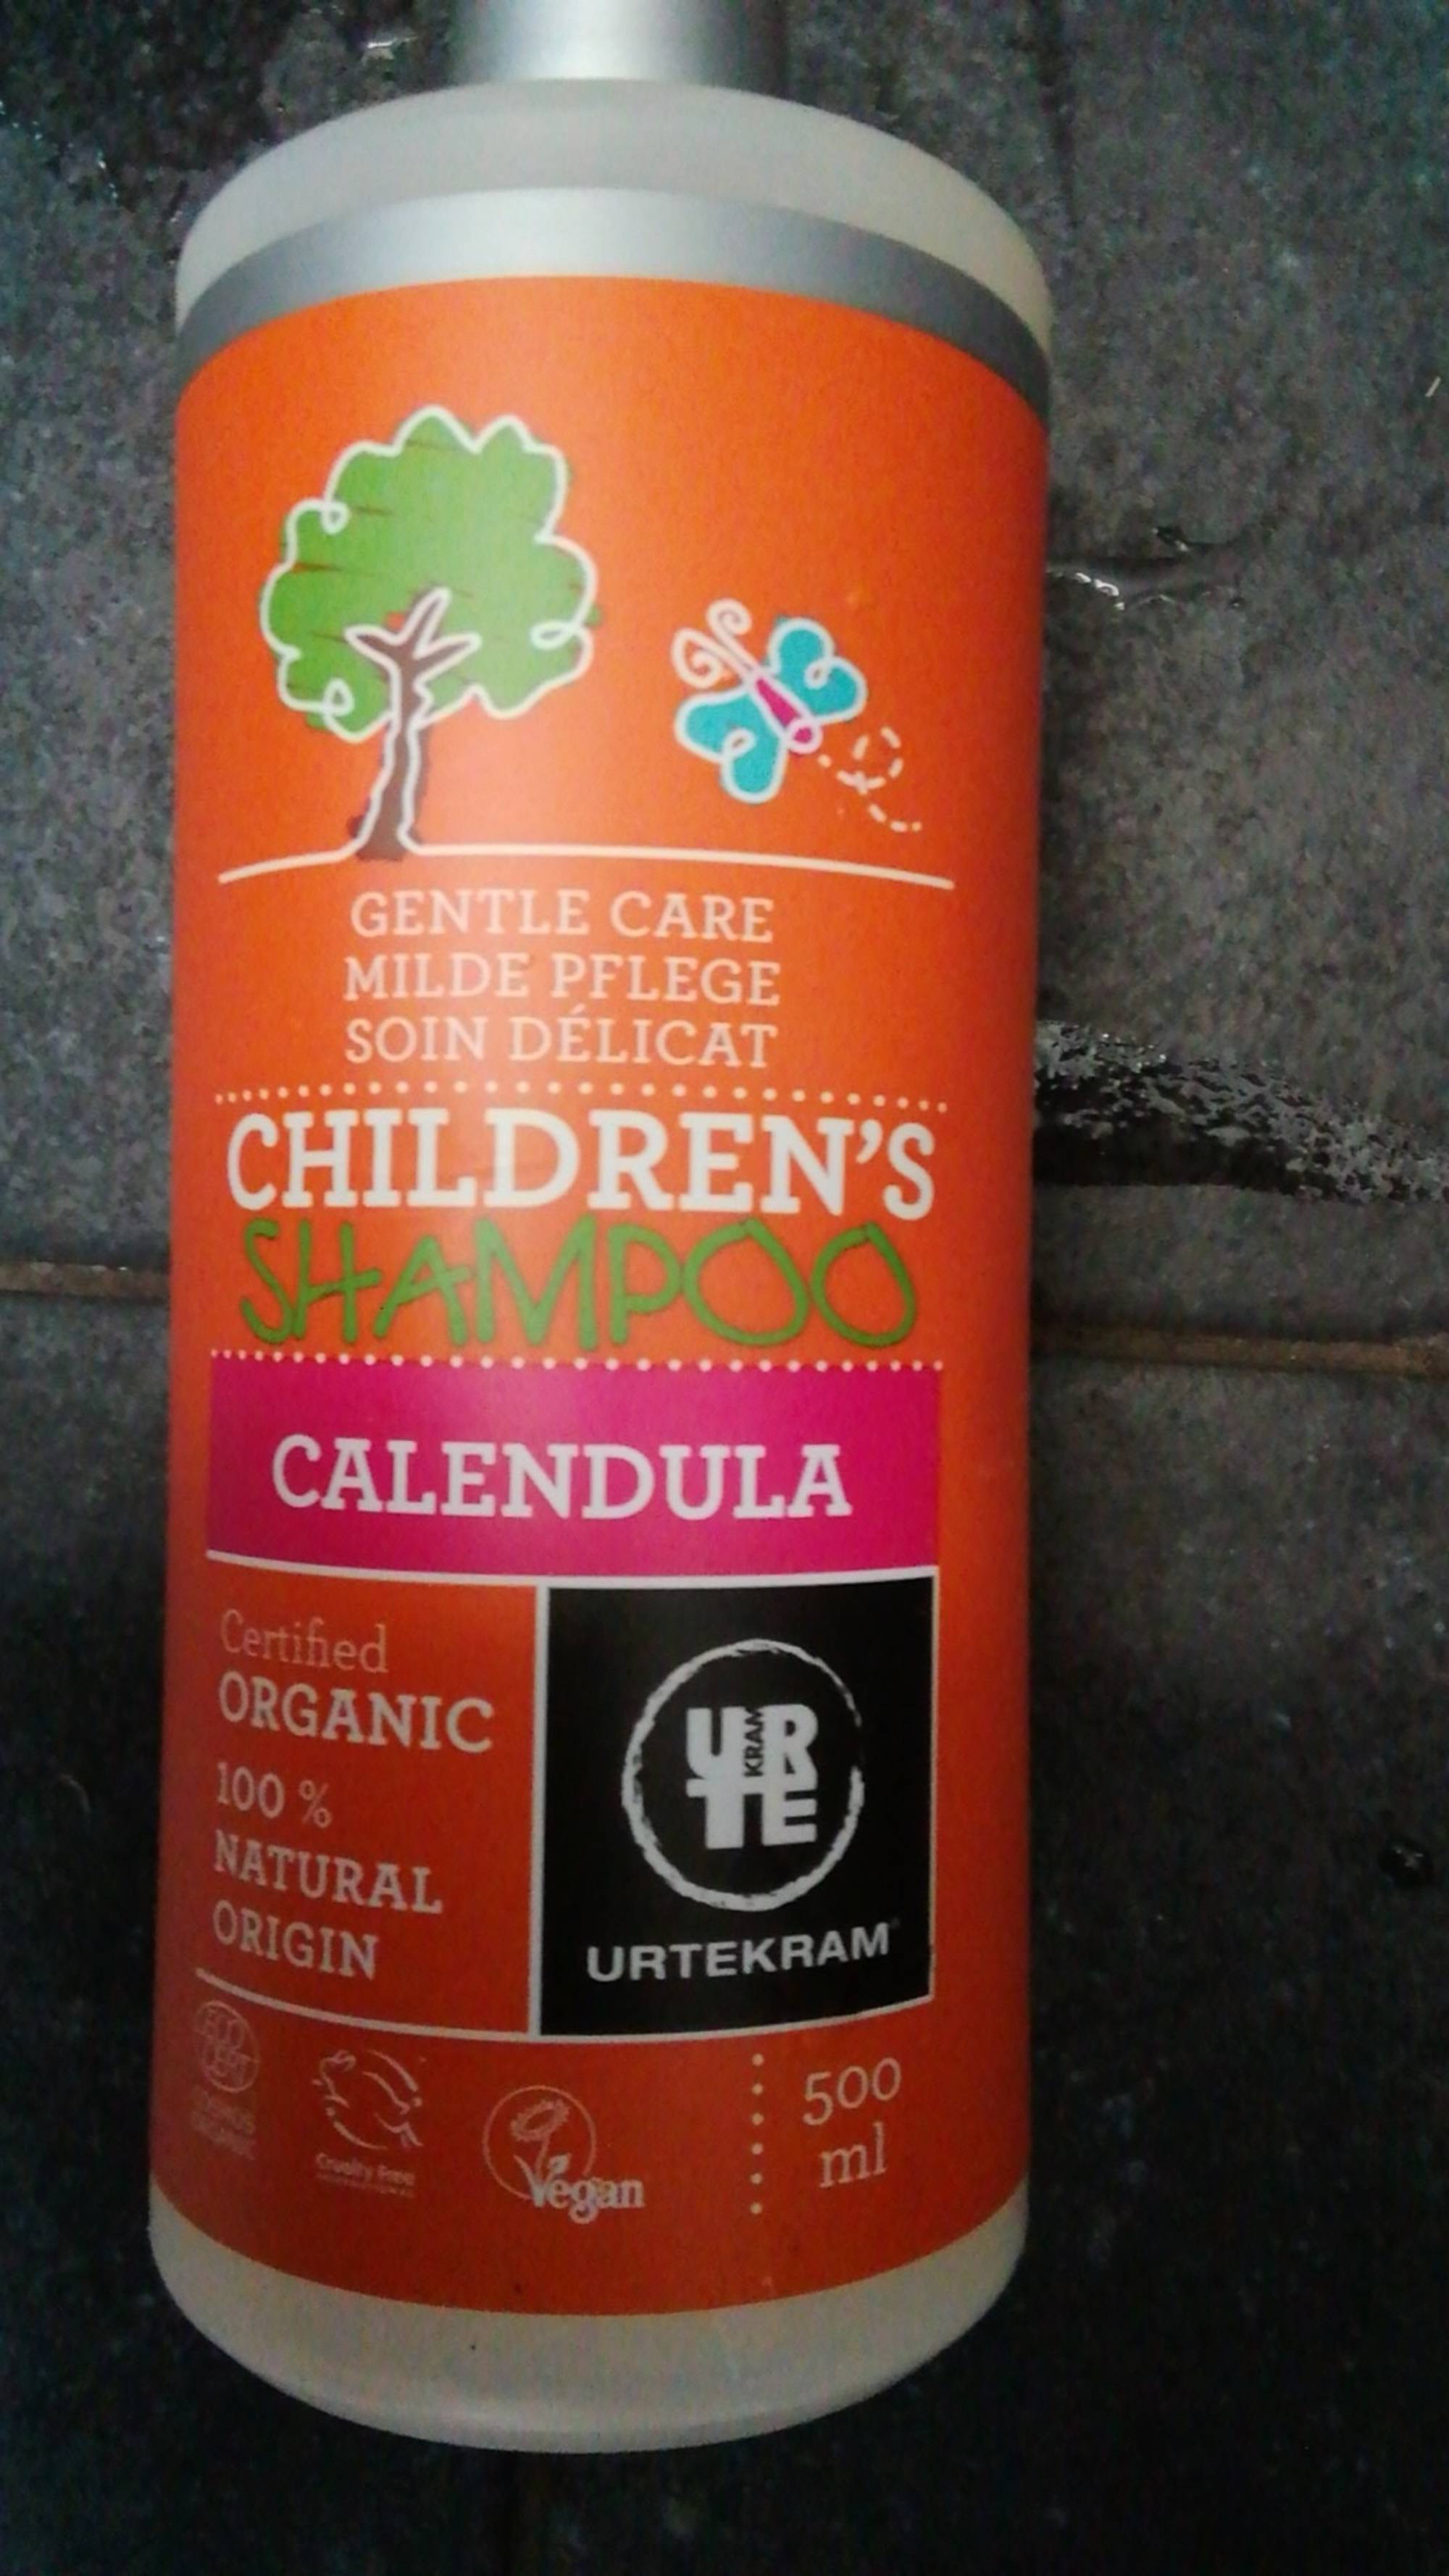 URTEKRAM - Children's shampoo calendula